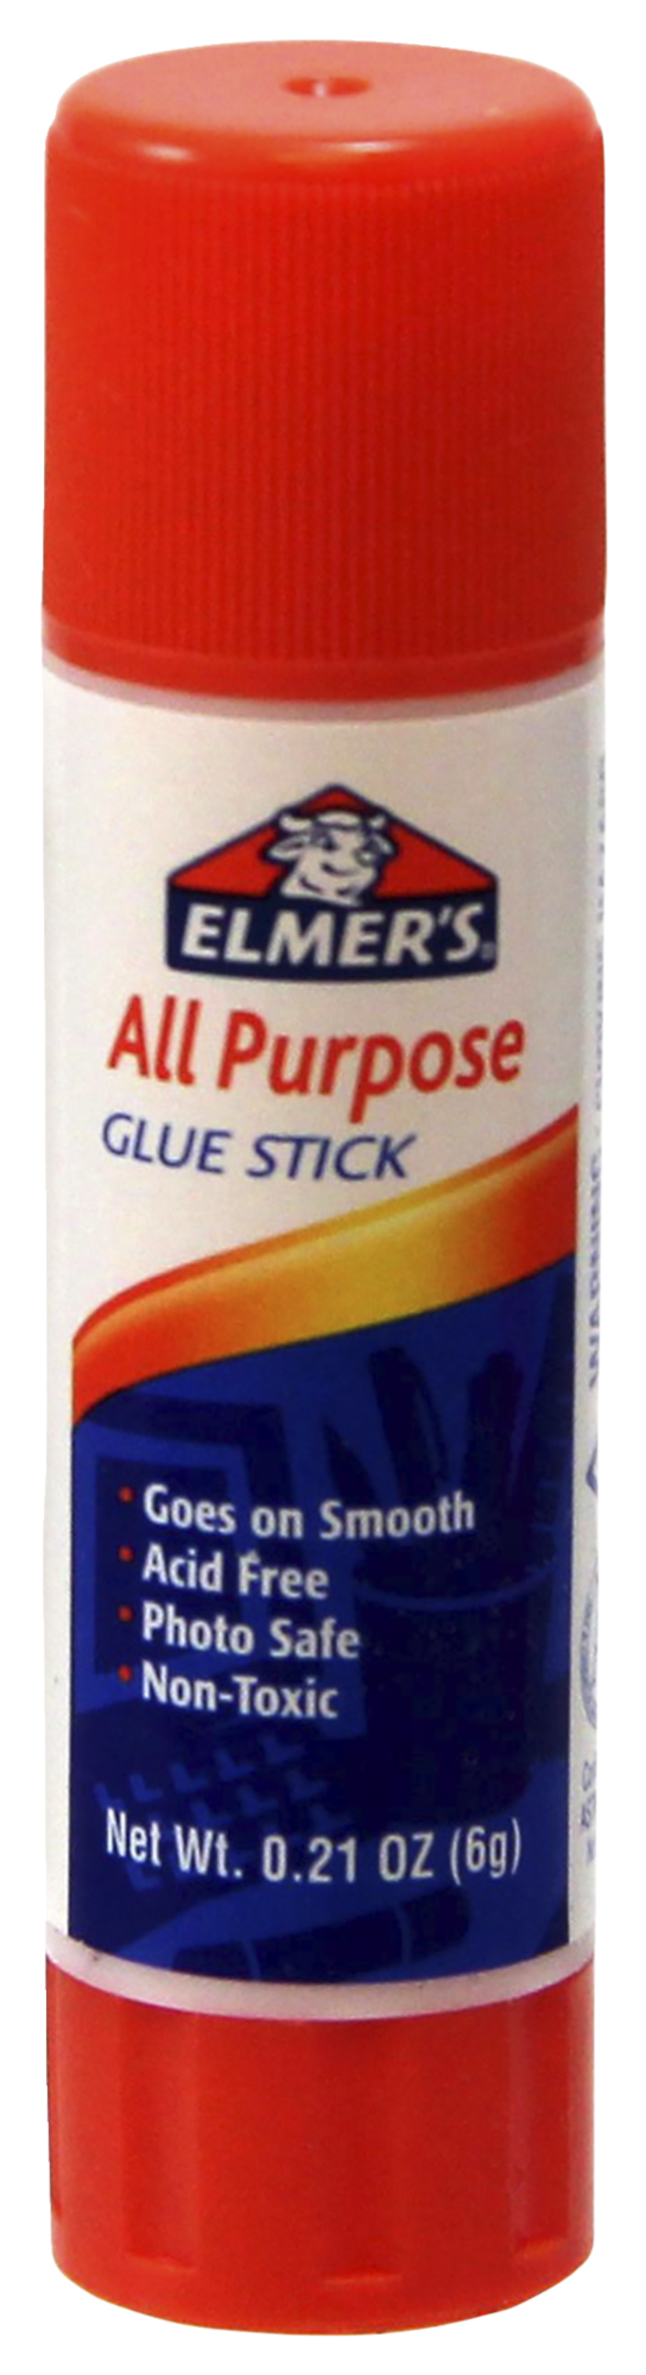 Elmer's Back To School All-Purpose School Glue Sticks